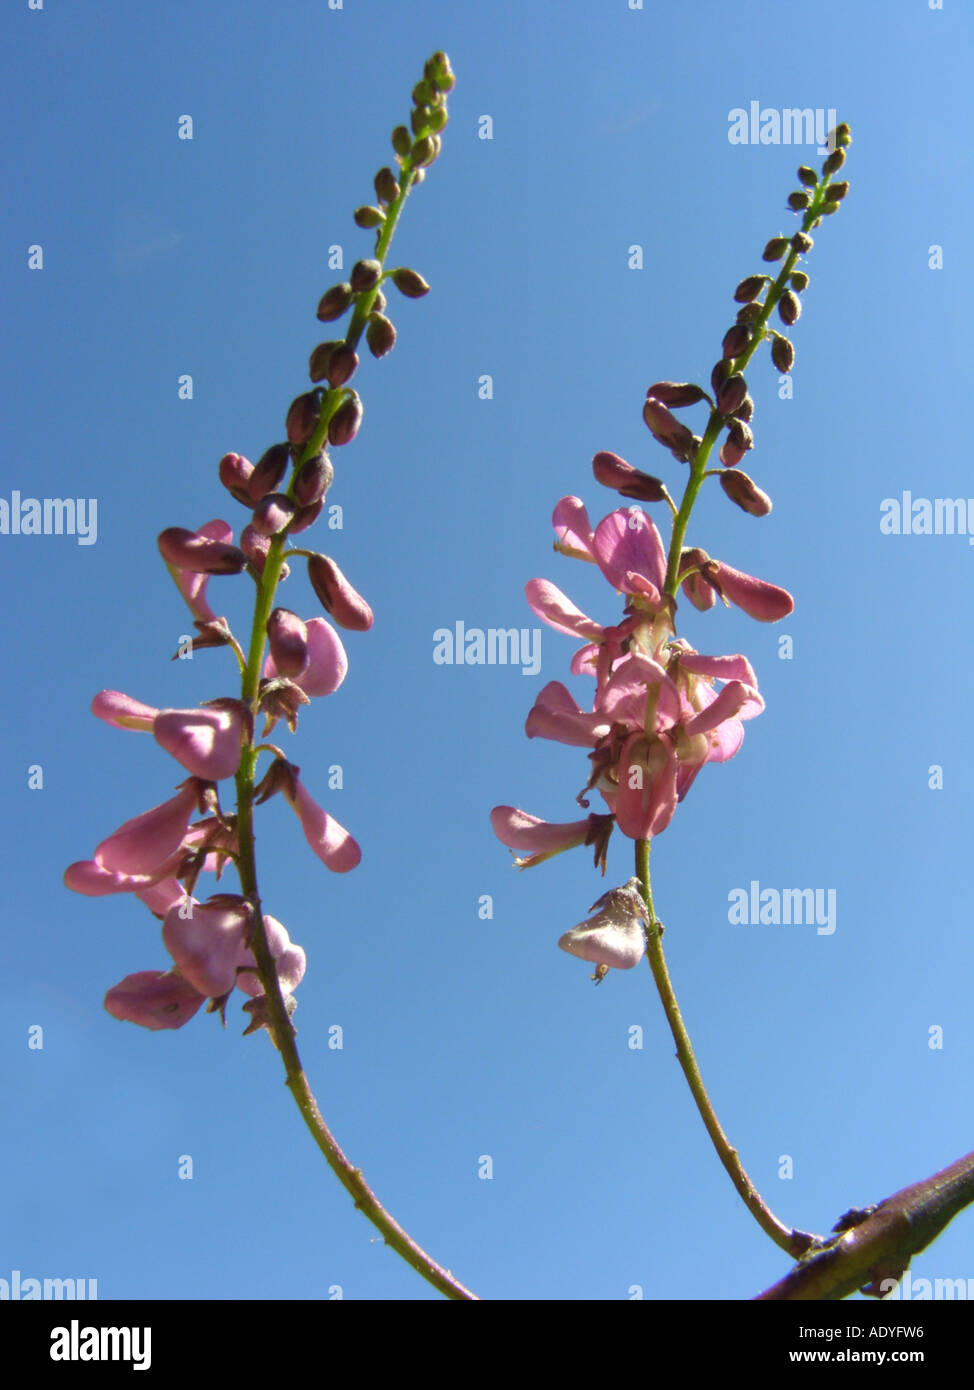 Poanin's indigo bush (Indigofera potaninii), flowers against blue sky Stock Photo